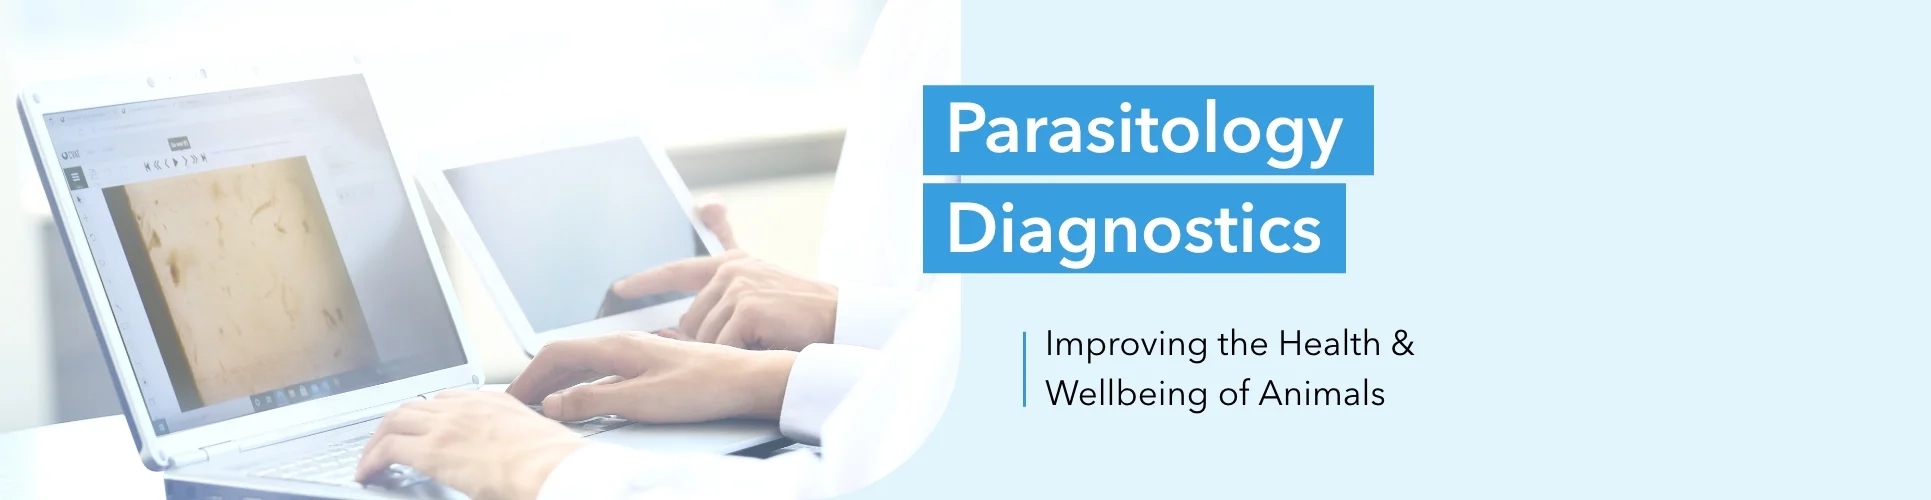 Parasitology Diagnostics